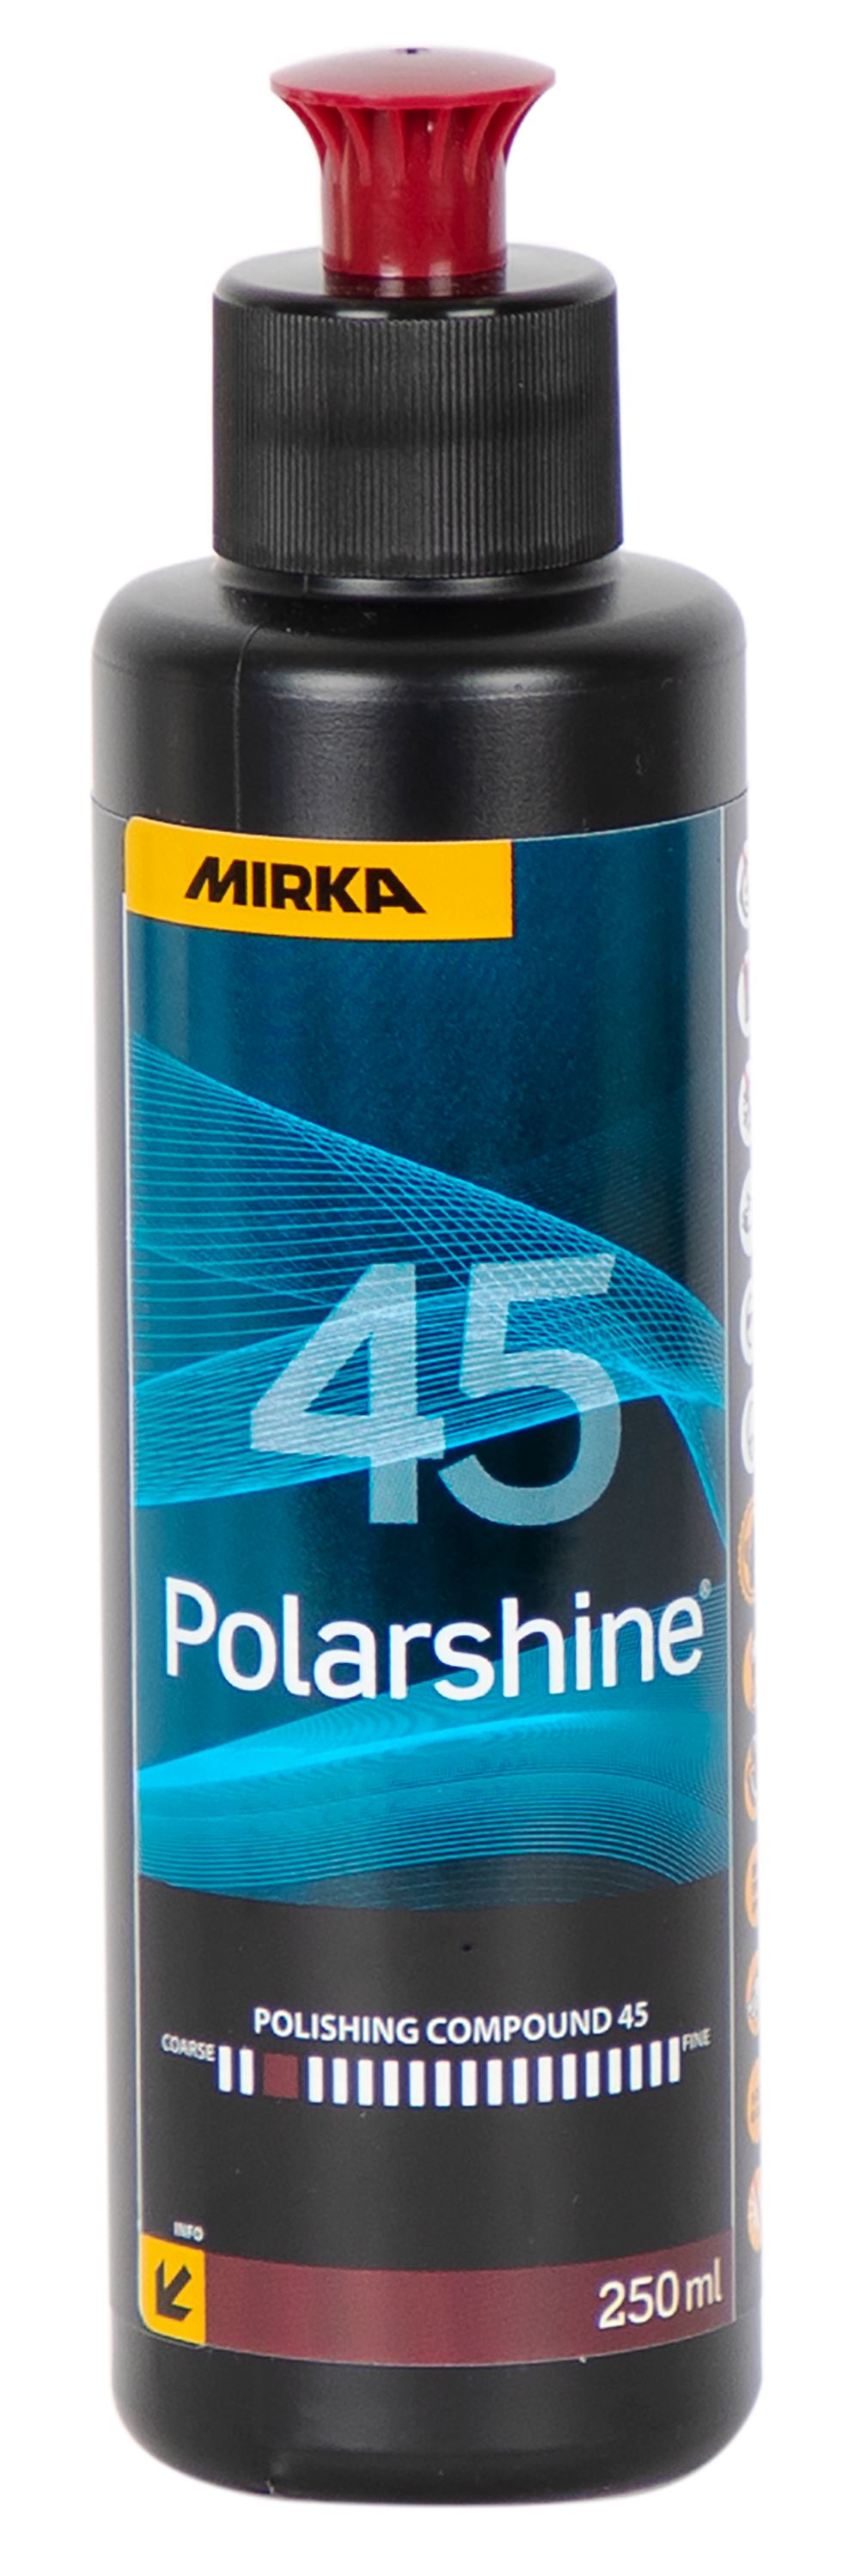 Polarshine 45 polermedel – 250ml